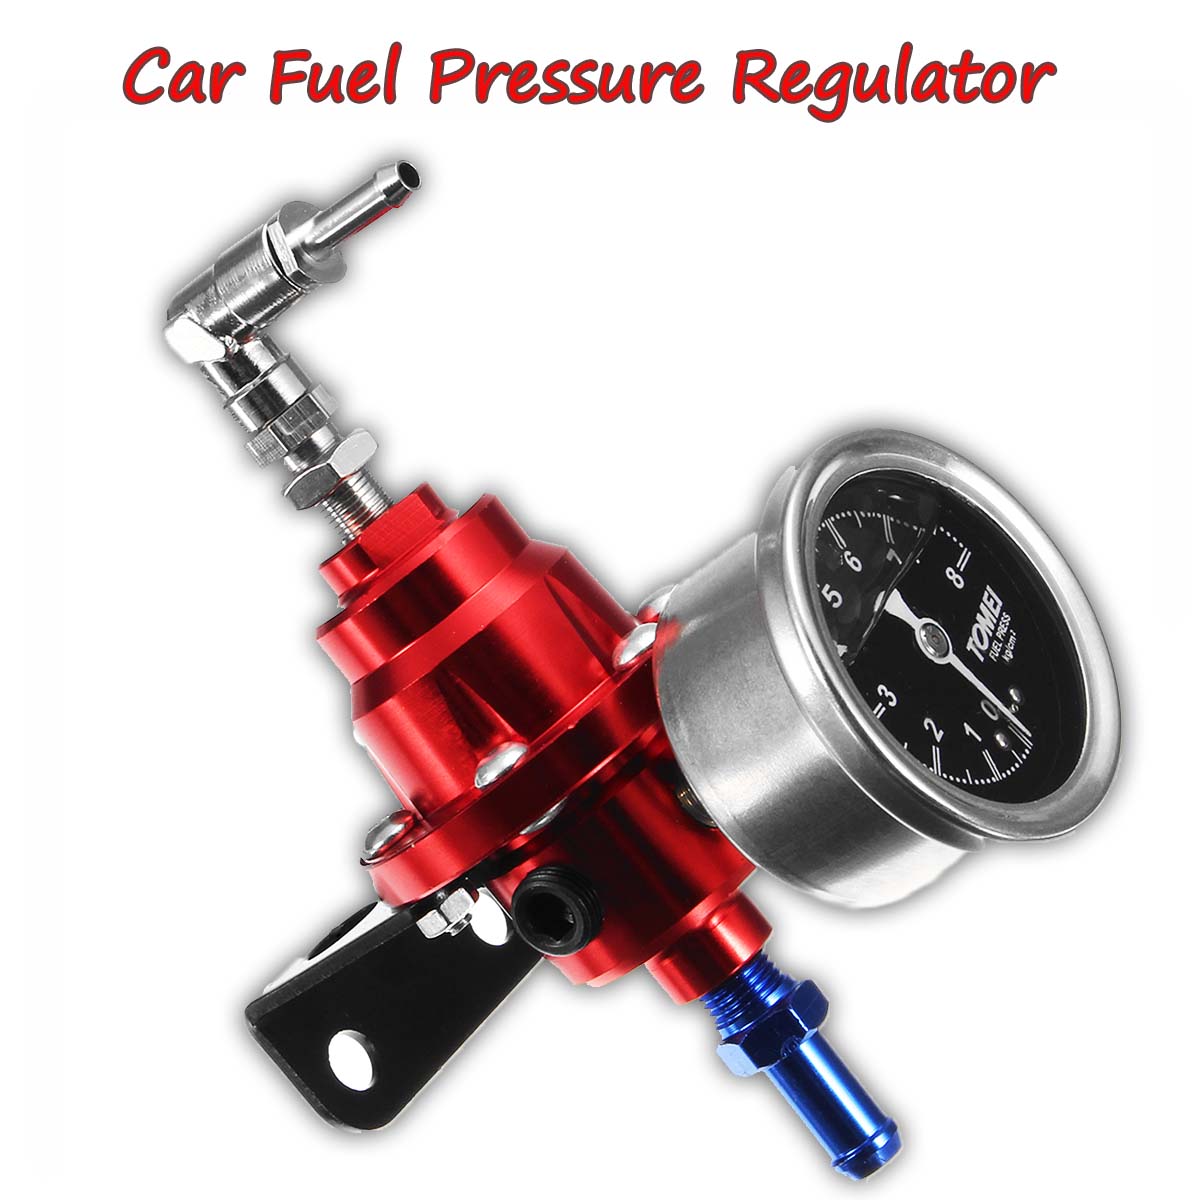 Universal-Adjustable-Car-Fuel-Hose-Auto-Pressure-Regulator-With-160PSI-Oil-Gauge-Kit-1336557